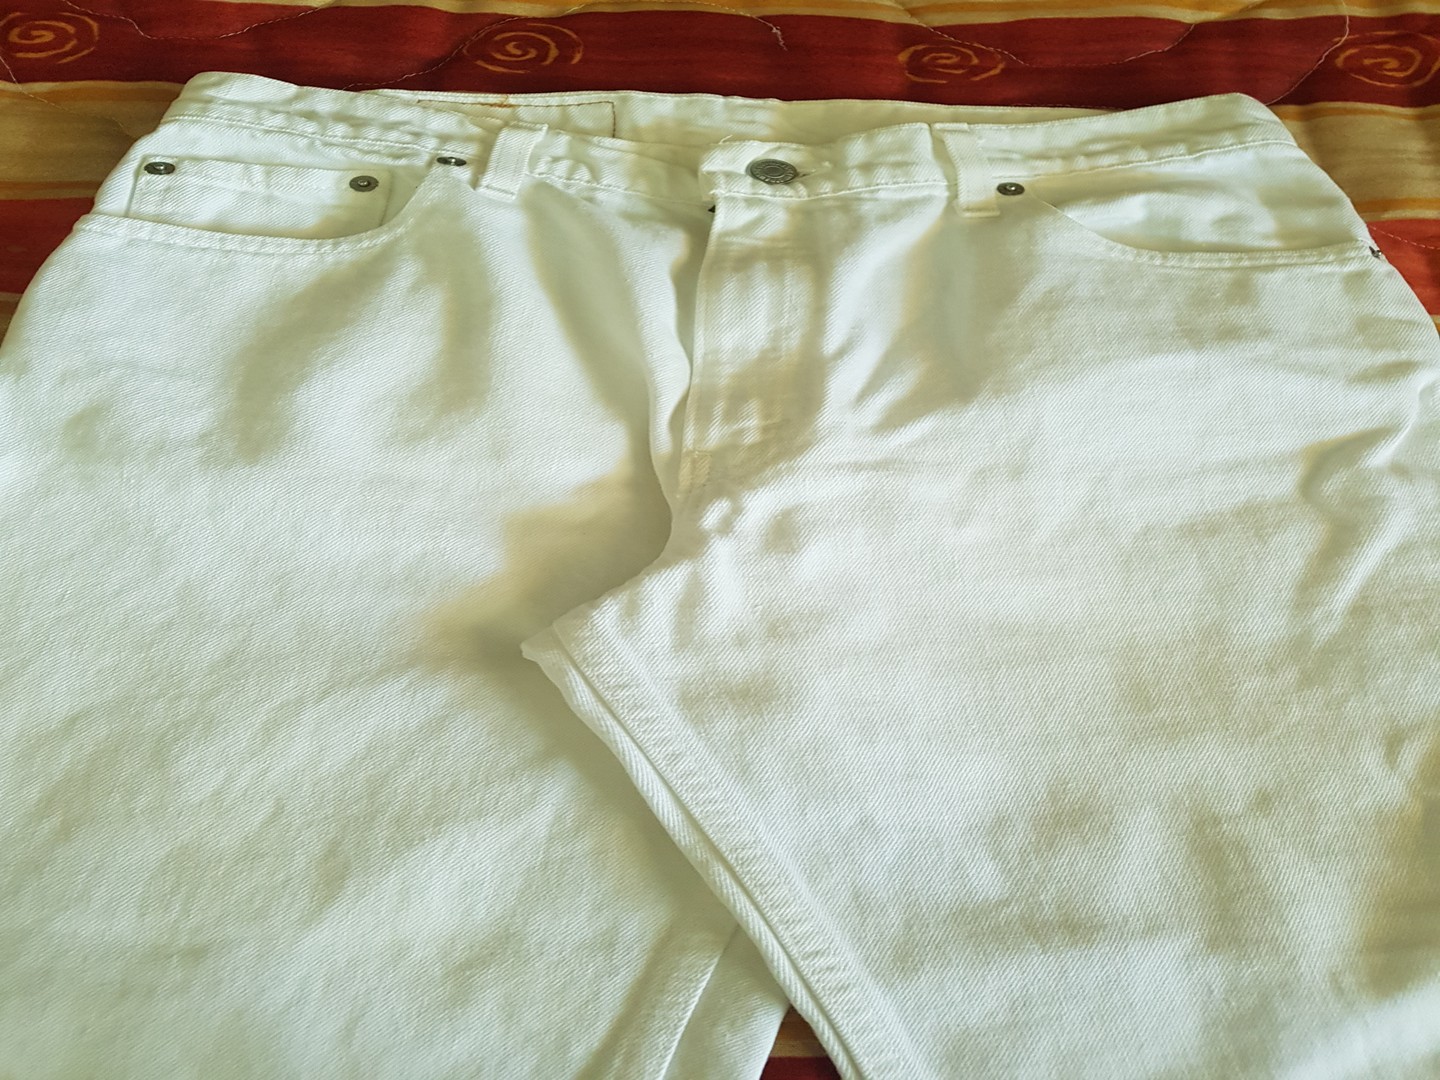 Pantalón blanco tela de jeans de algodón, marca Levi's. 5